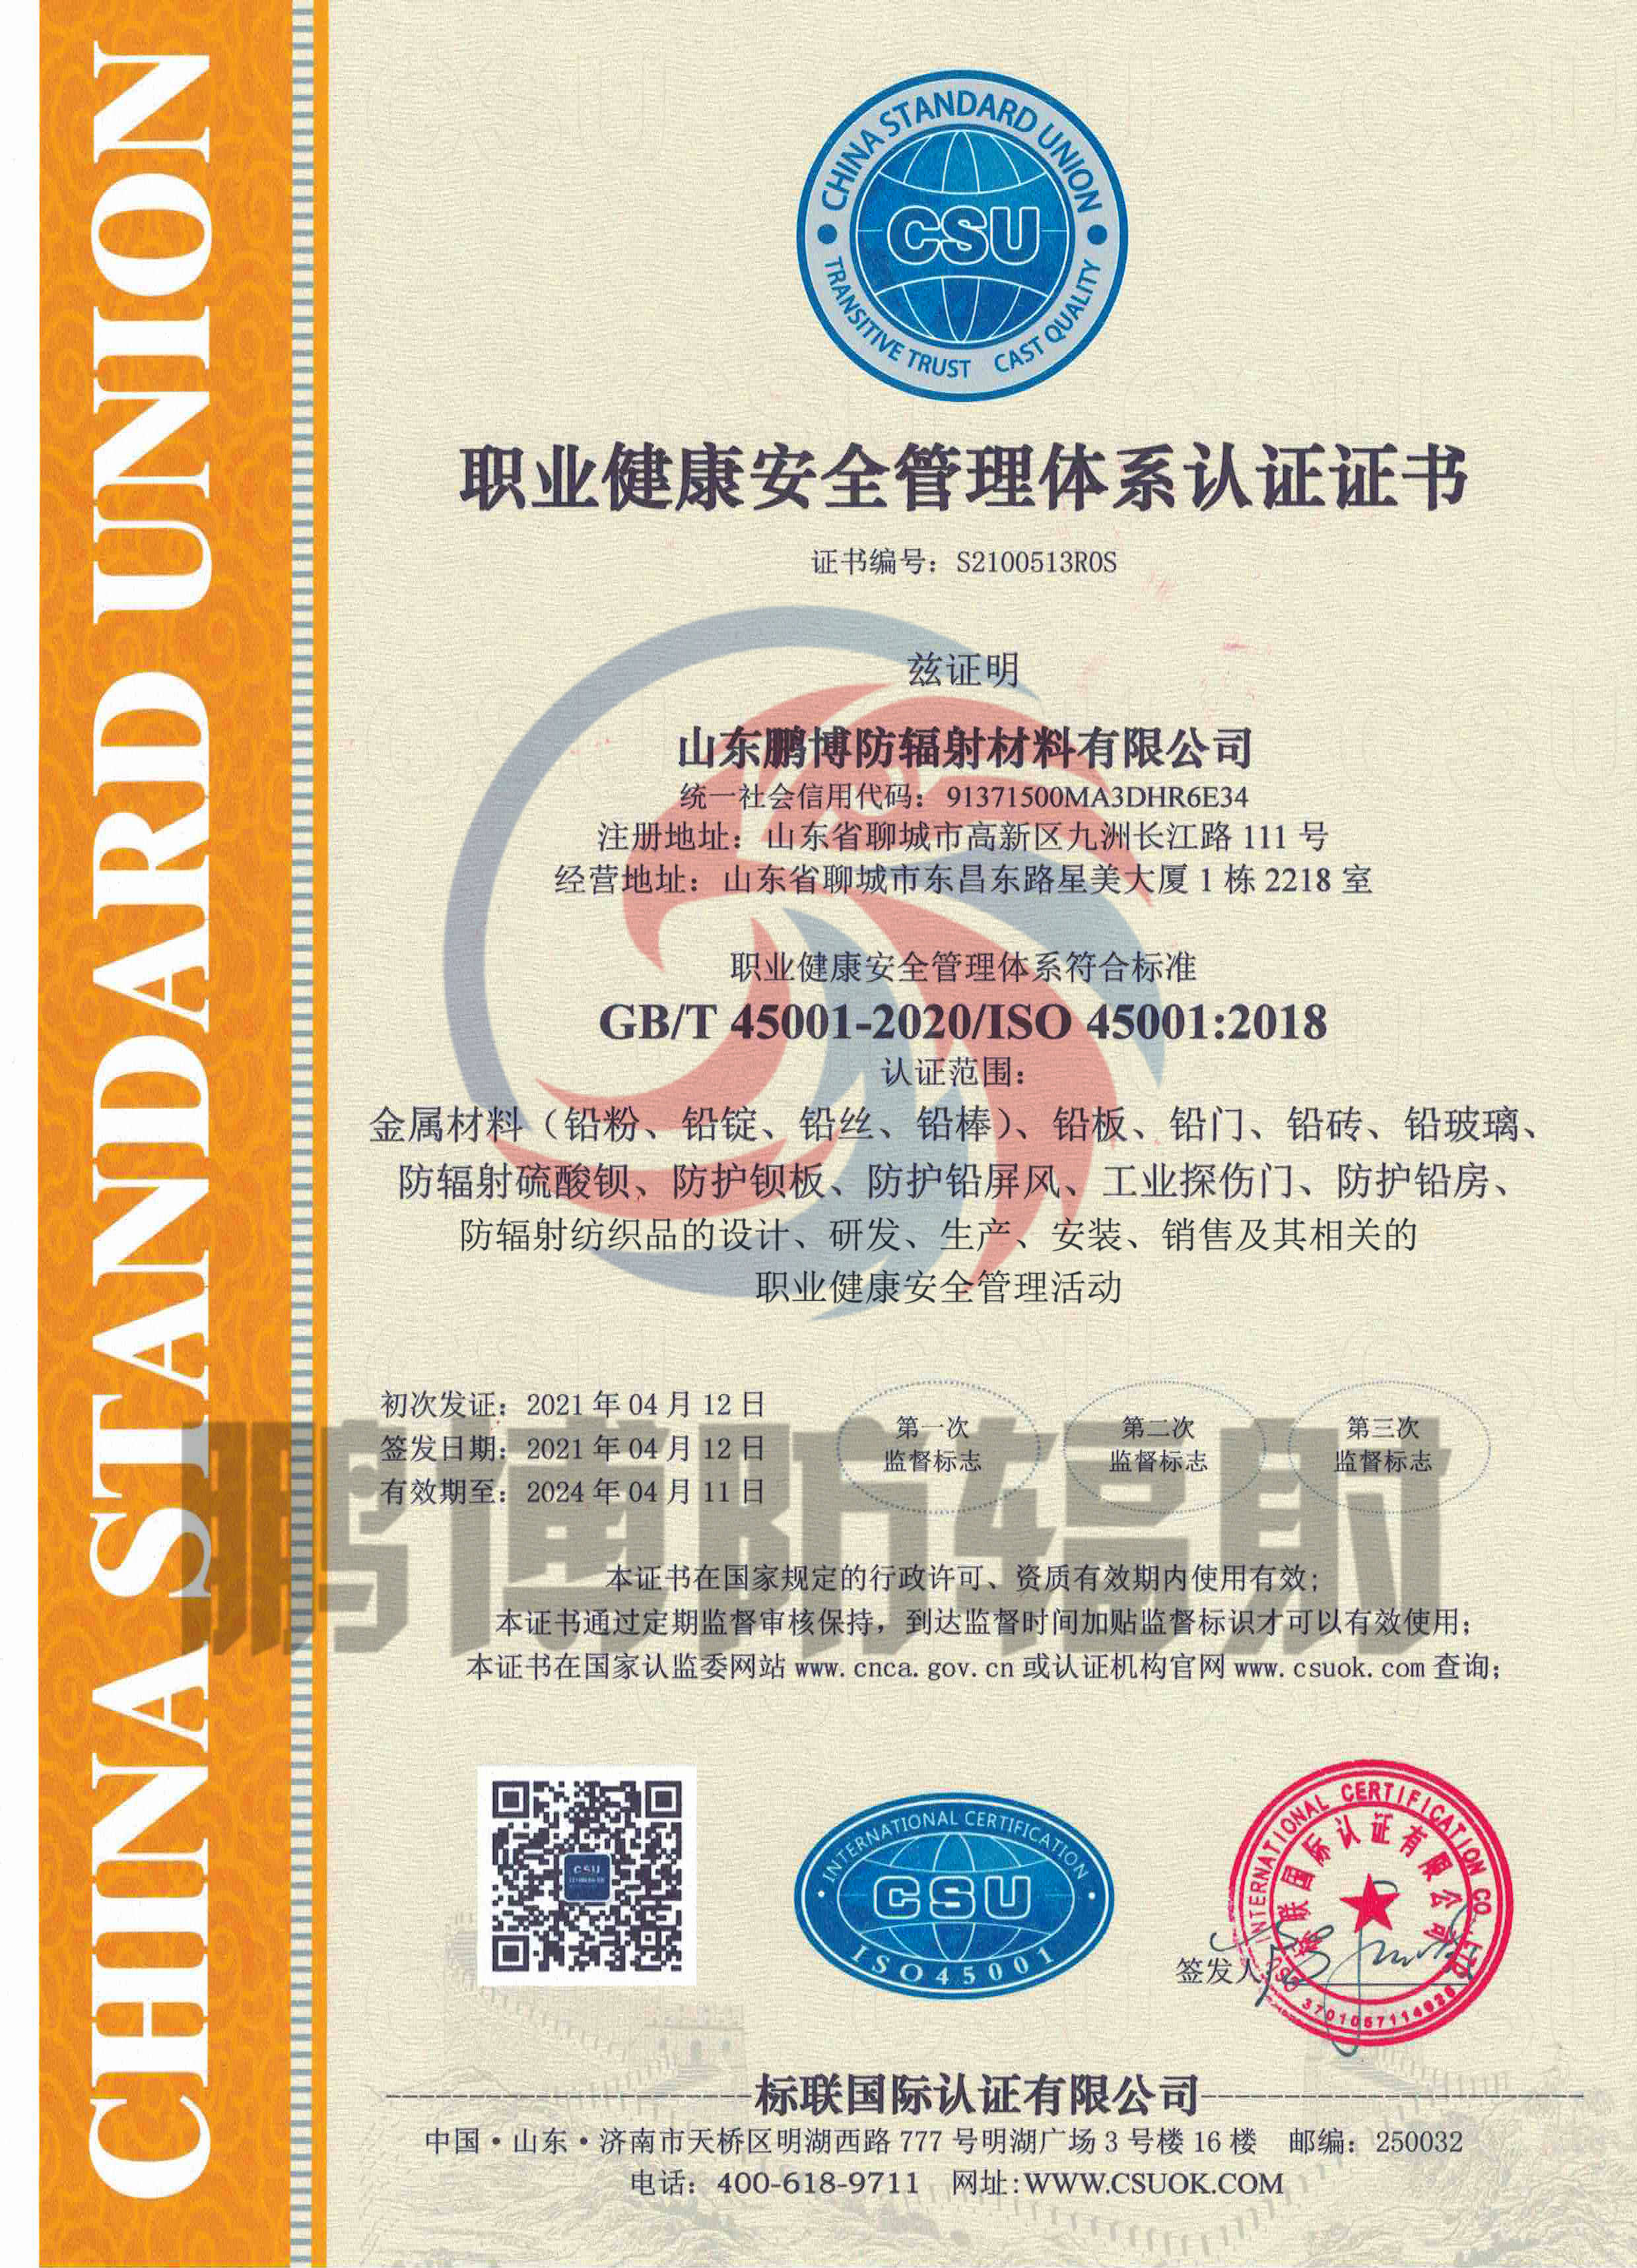 GB/T45001-2020/ISO 45001:2018 职业健康安全管理体系认证证书